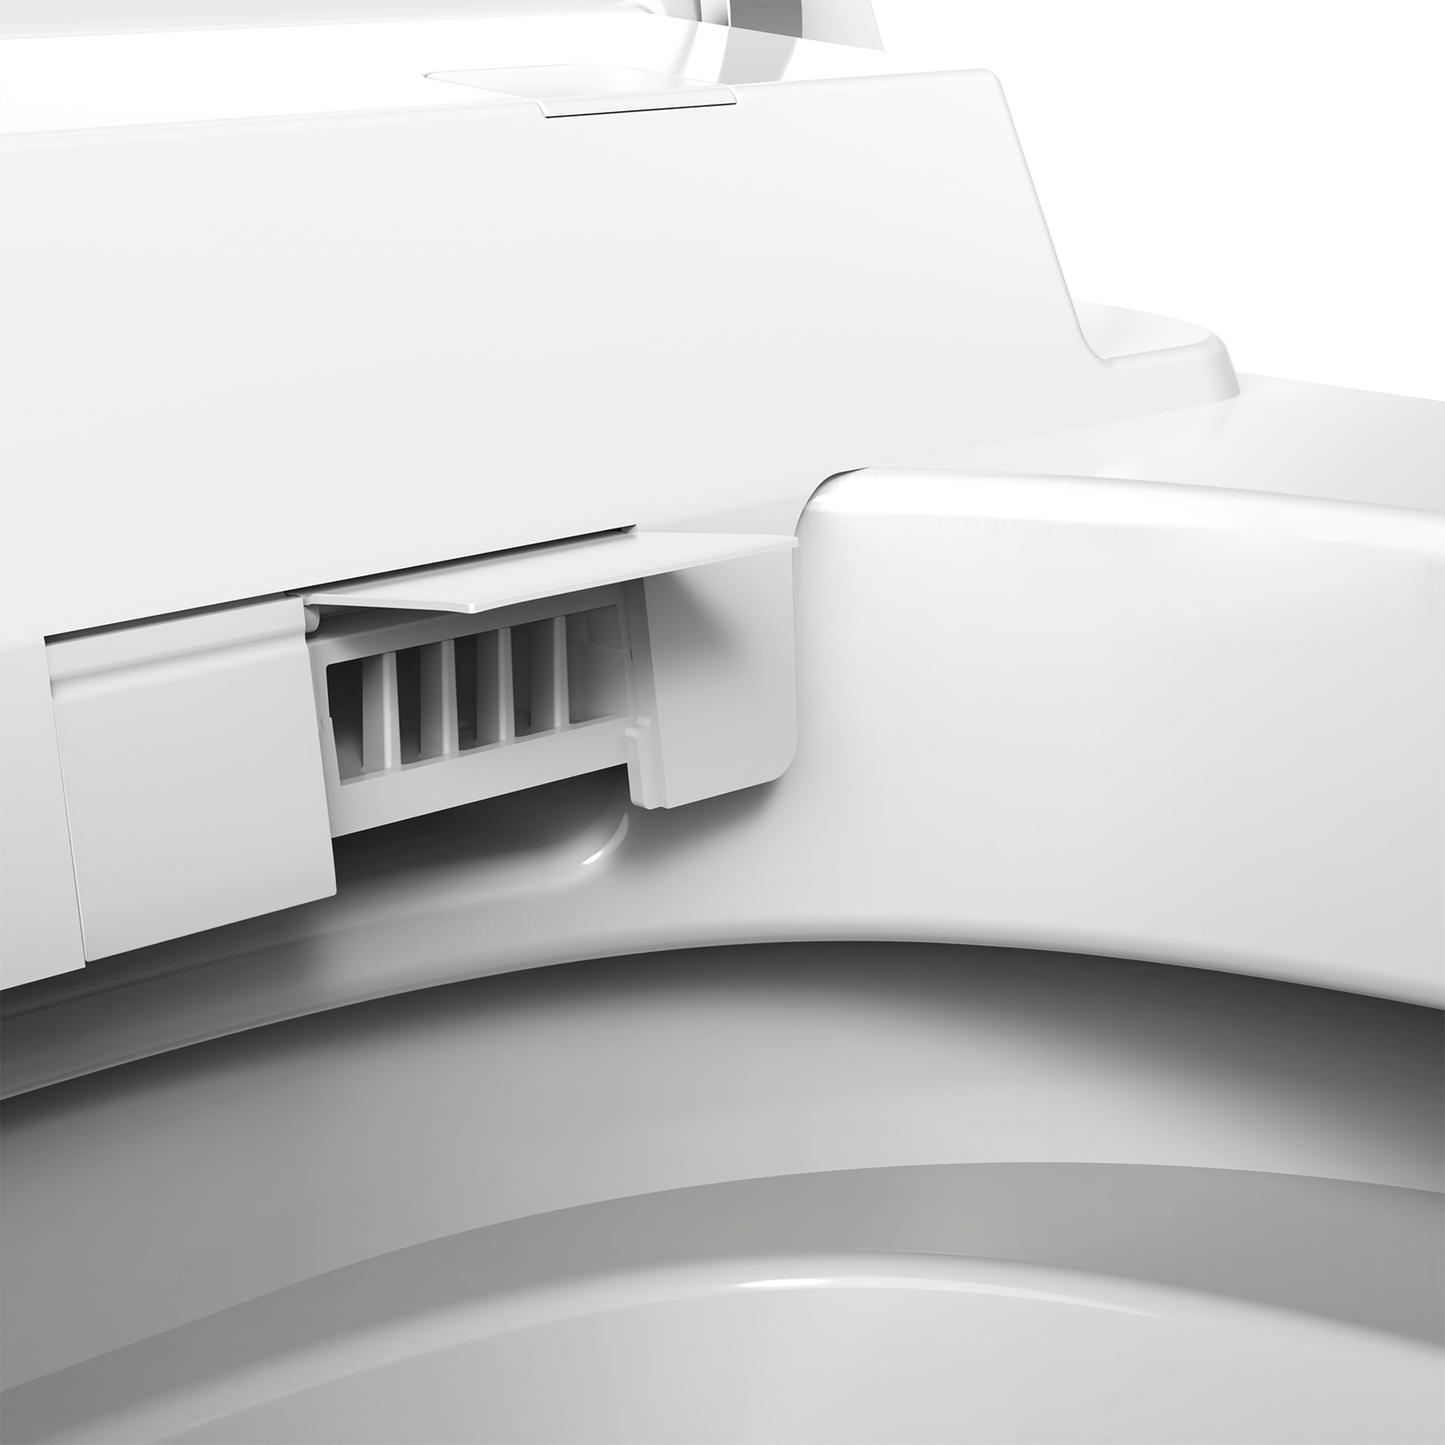 Smart Toilet U-Shaped LED Light Automatic Flush with Remote Control/Foot Sensor/Night Light T162A